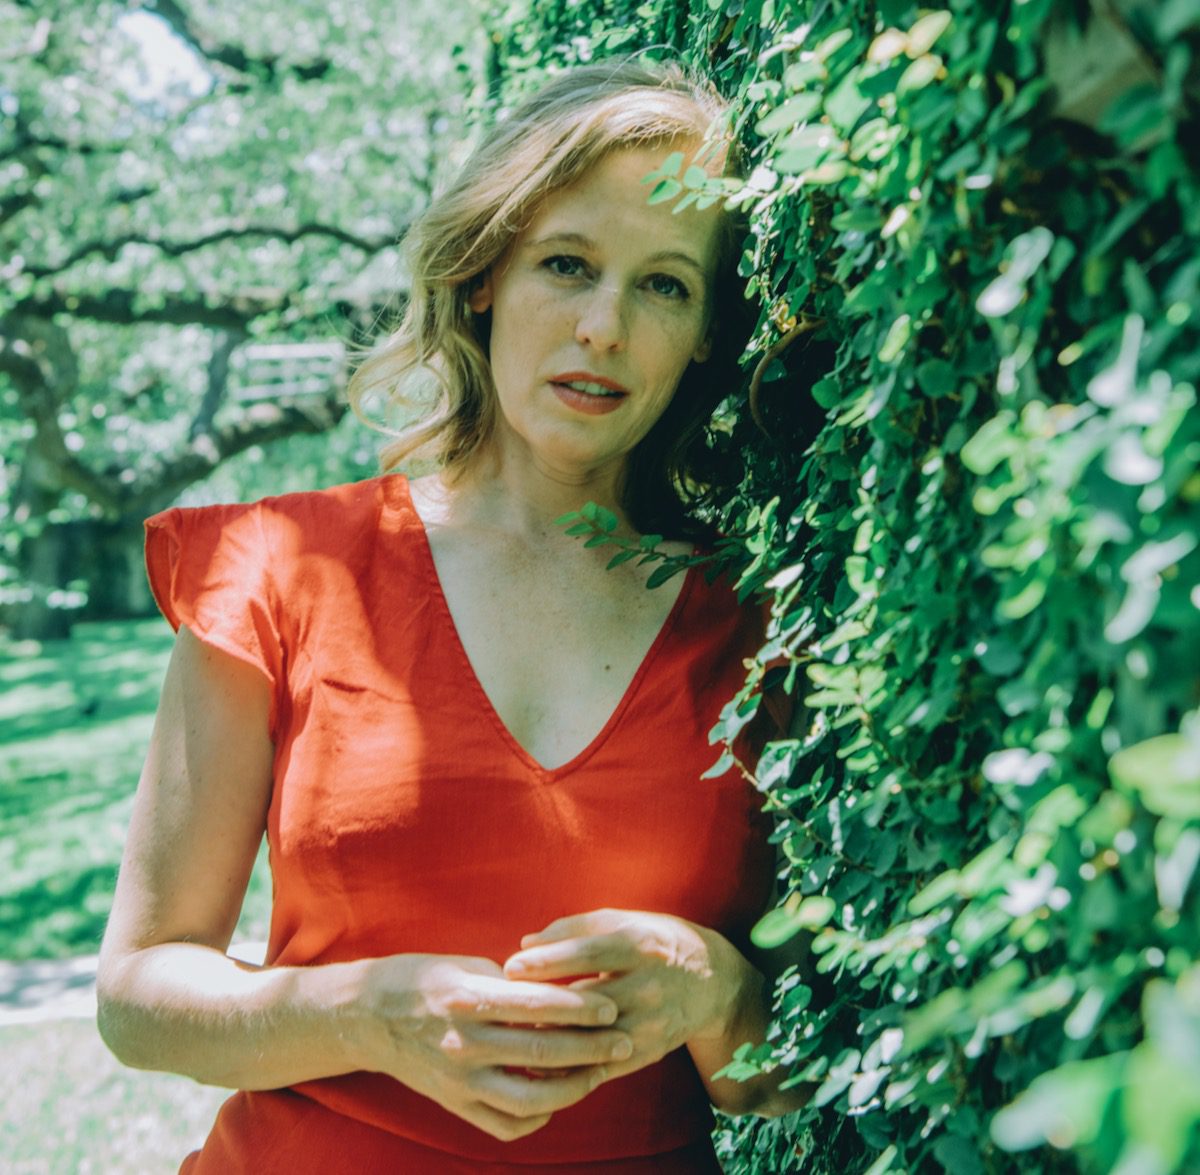 Tift Merritt in red dress leans against an ivy wall